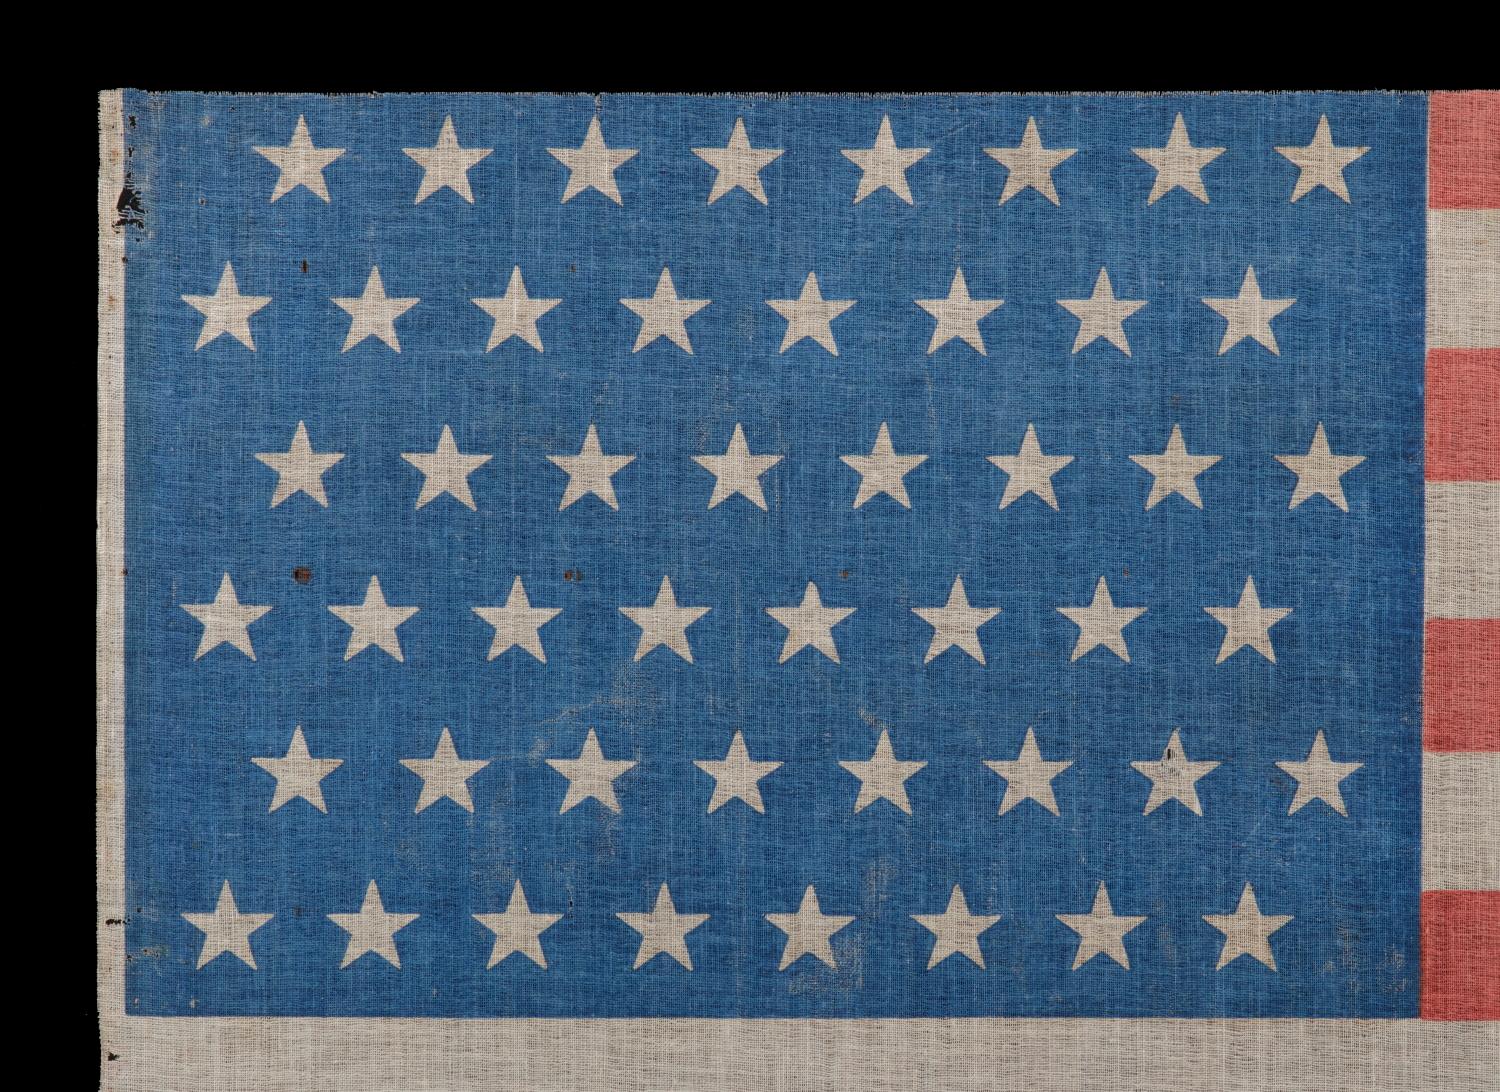 1918 american flag